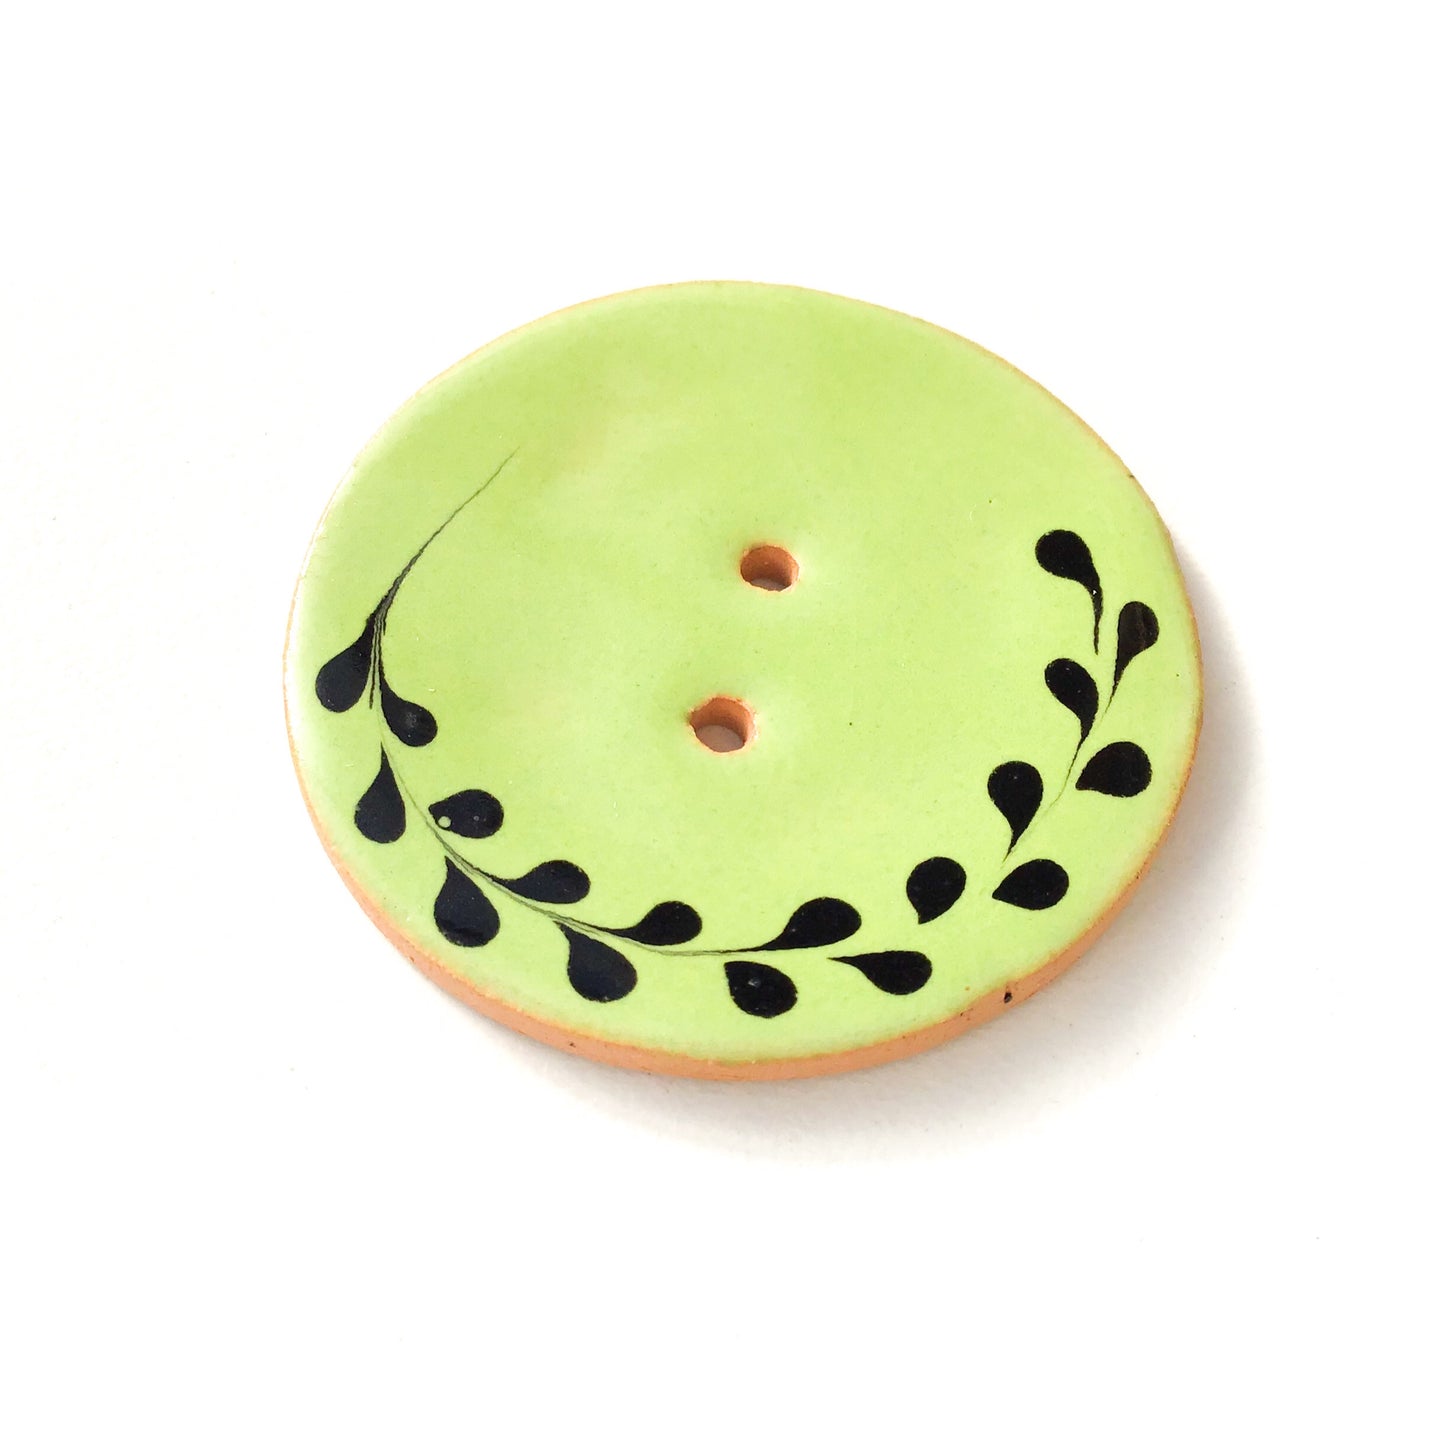 Lime Green Ceramic Button with Black Detail - Decorative Ceramic Button - 1 3/8"